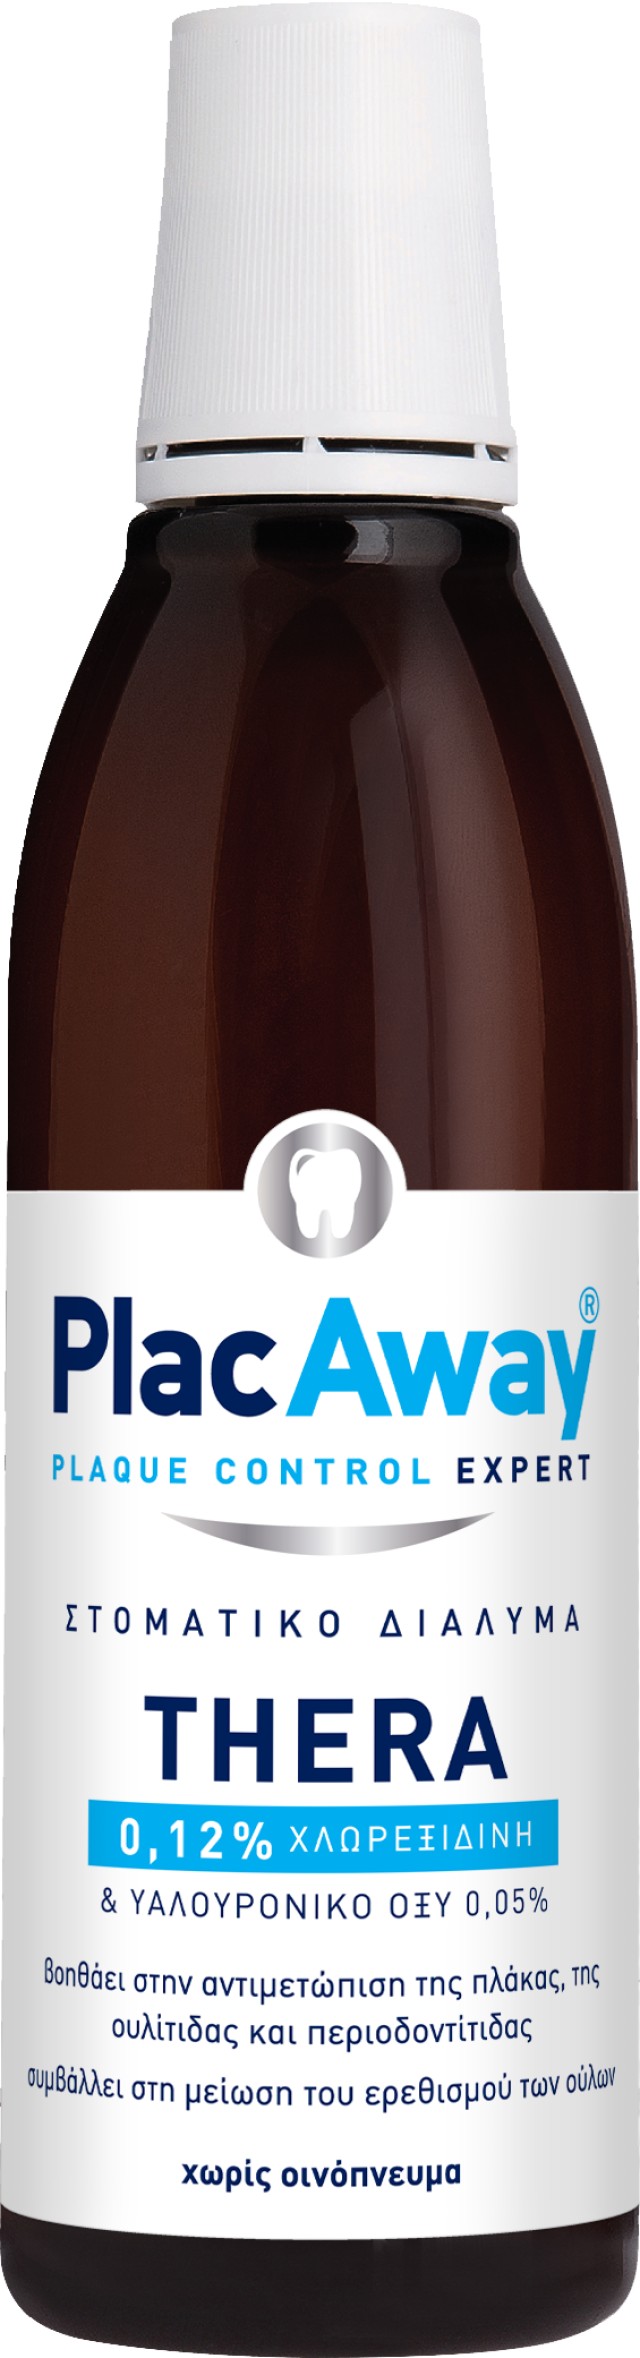 Plac Away Thera Plus 0.12% Στοματικό Διάλυμα με Χλωρεξιδίνη, 250ml